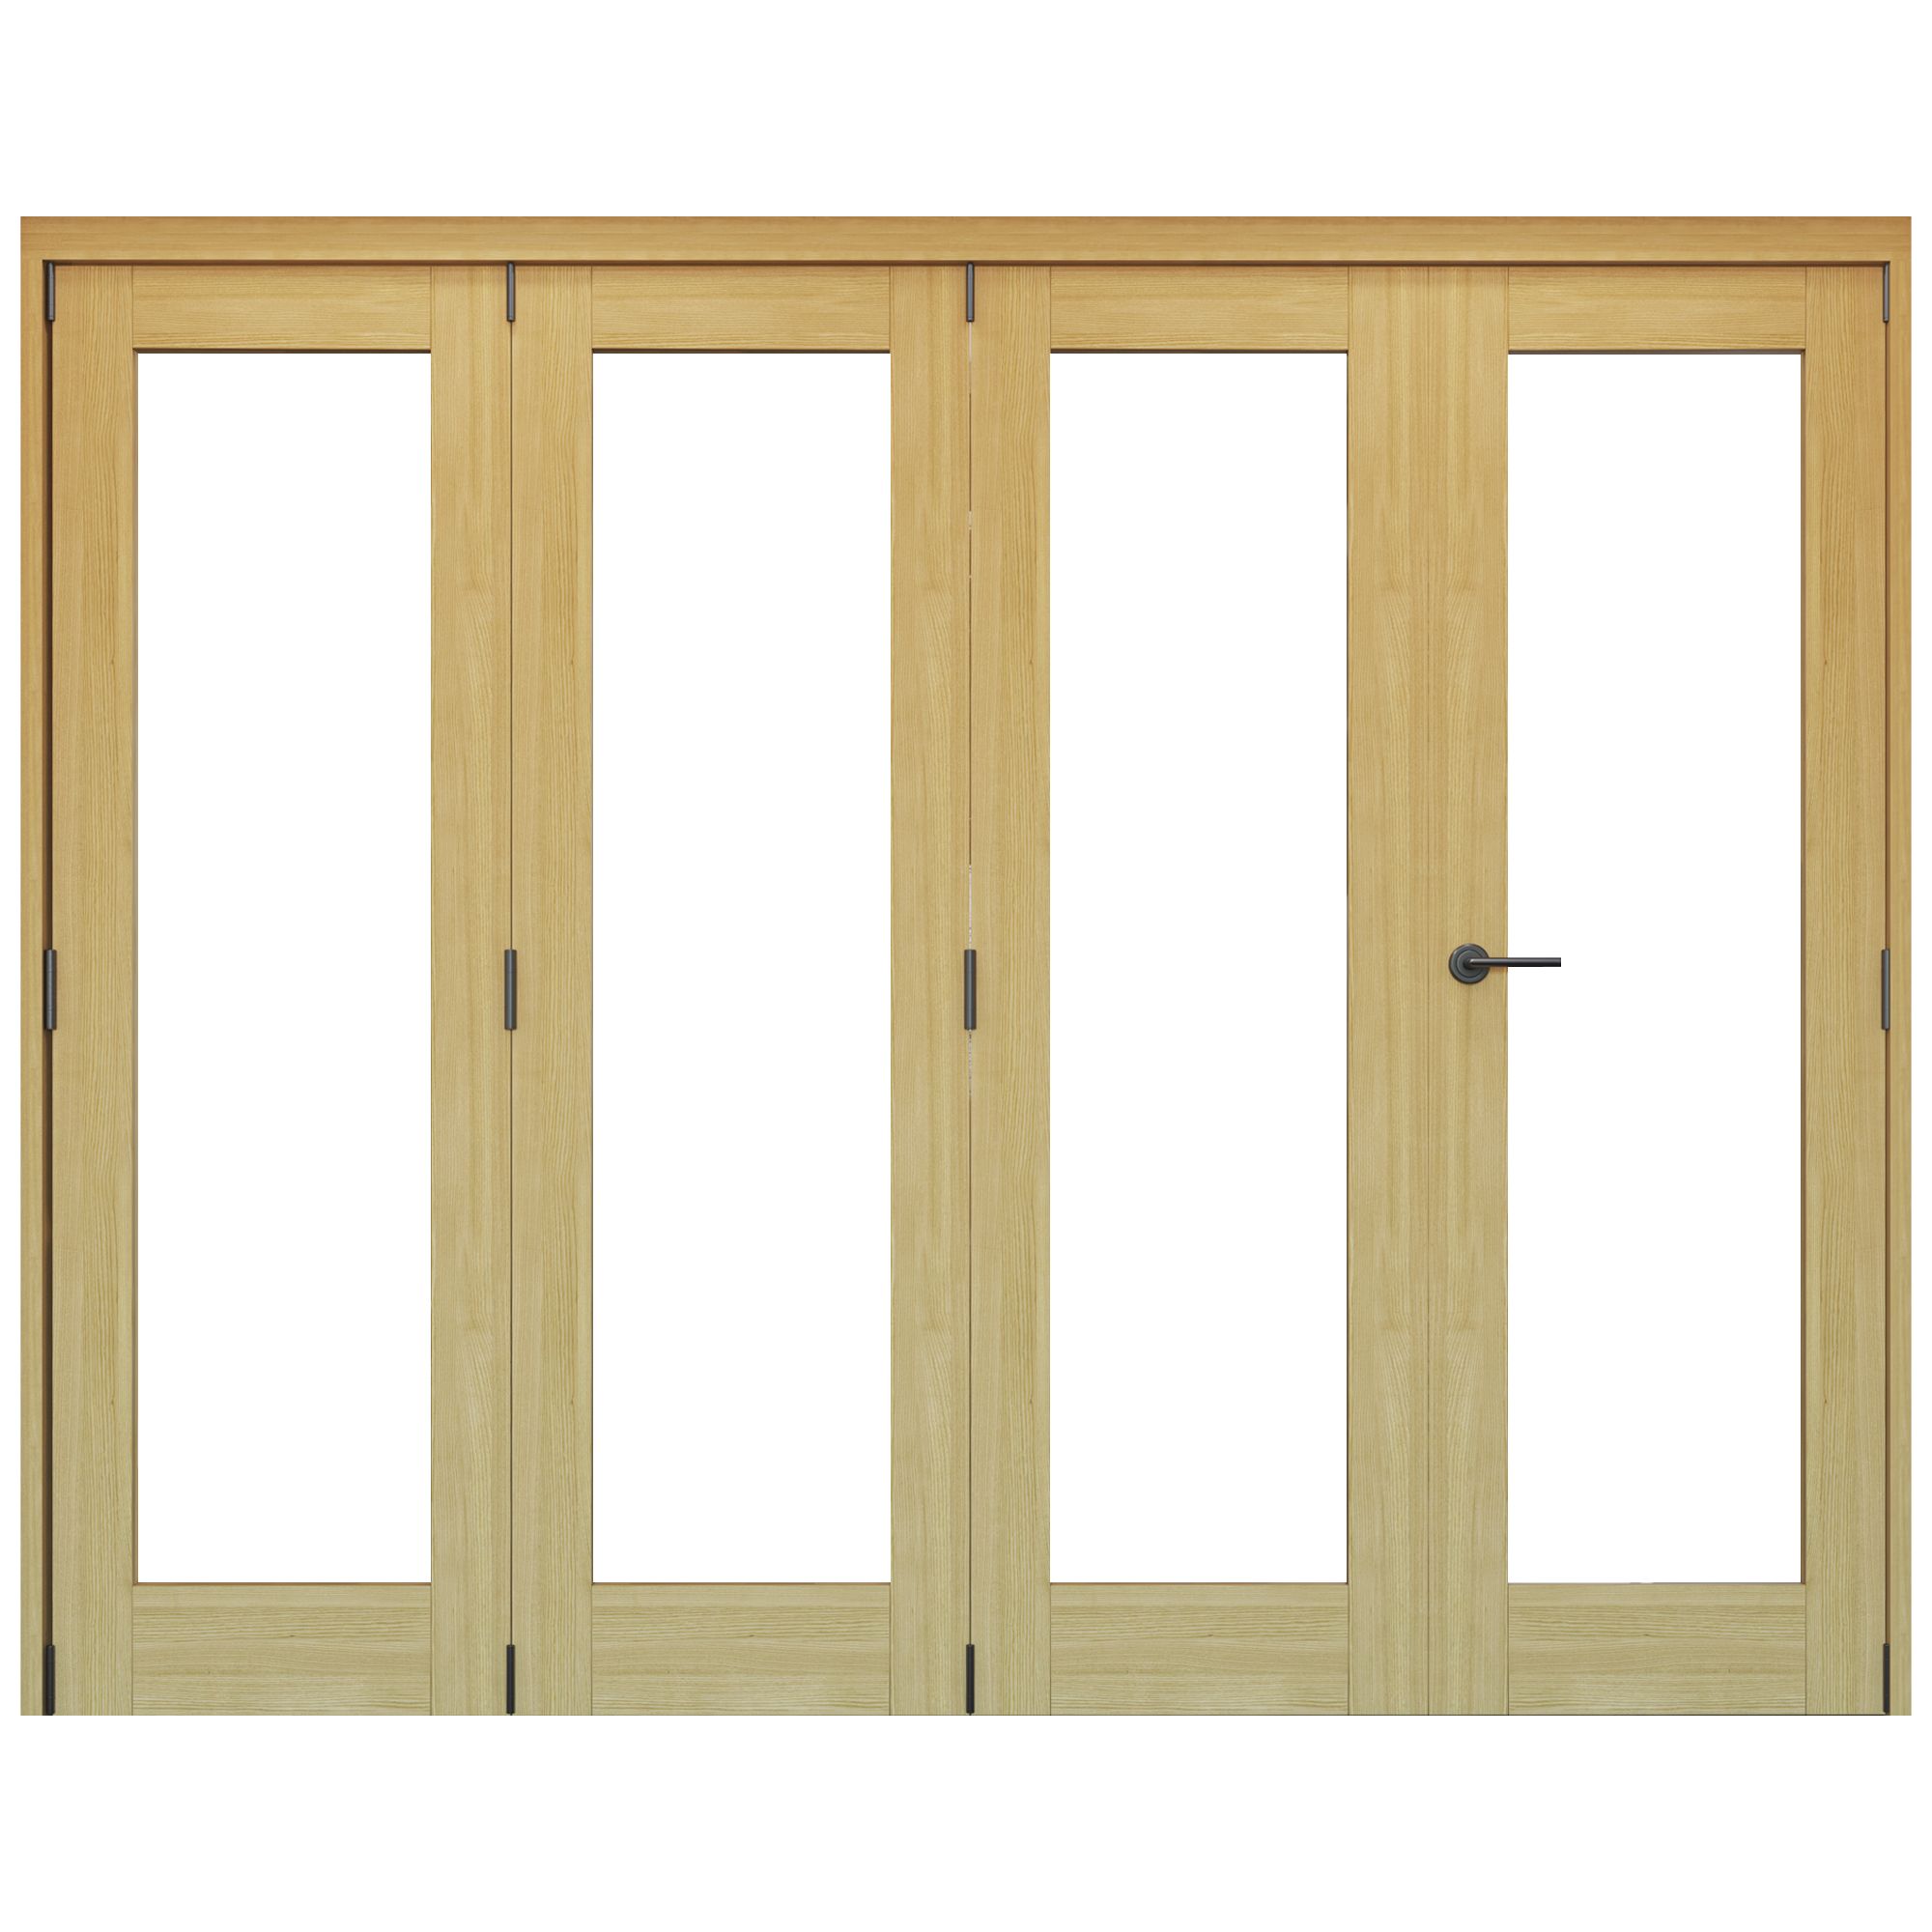 Vertical 0 panel 1 Lite Plain Clear Glazed Shaker Unfinished White oak effect Timber White oak veneer Folding Internal Folding Door set, (H)2060mm (W)2209mm